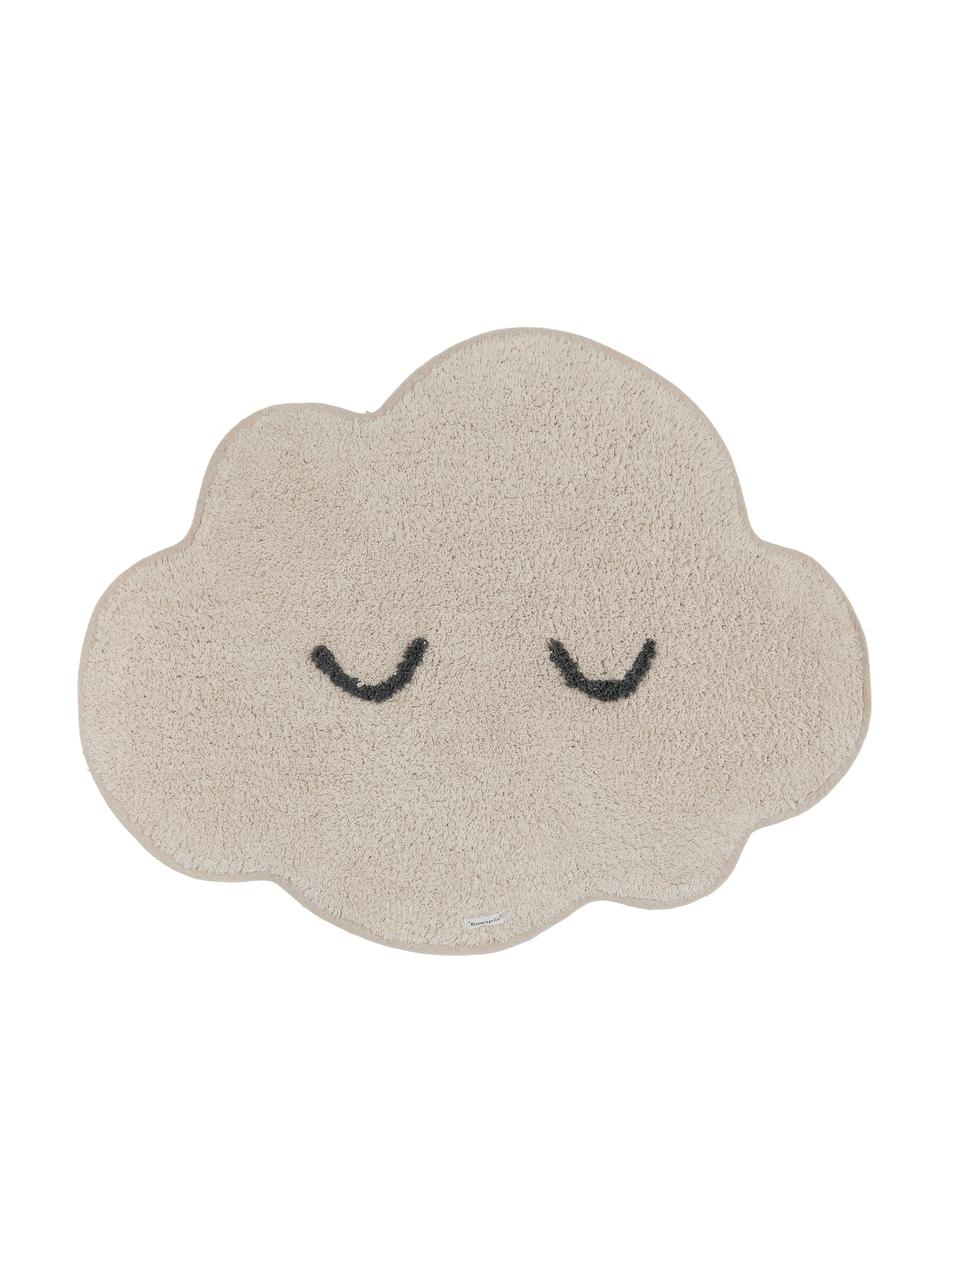 Tappeto in cotone a forma di nuvola  Cloud, Cotone, Beige, Larg. 57 x Lung. 82 cm